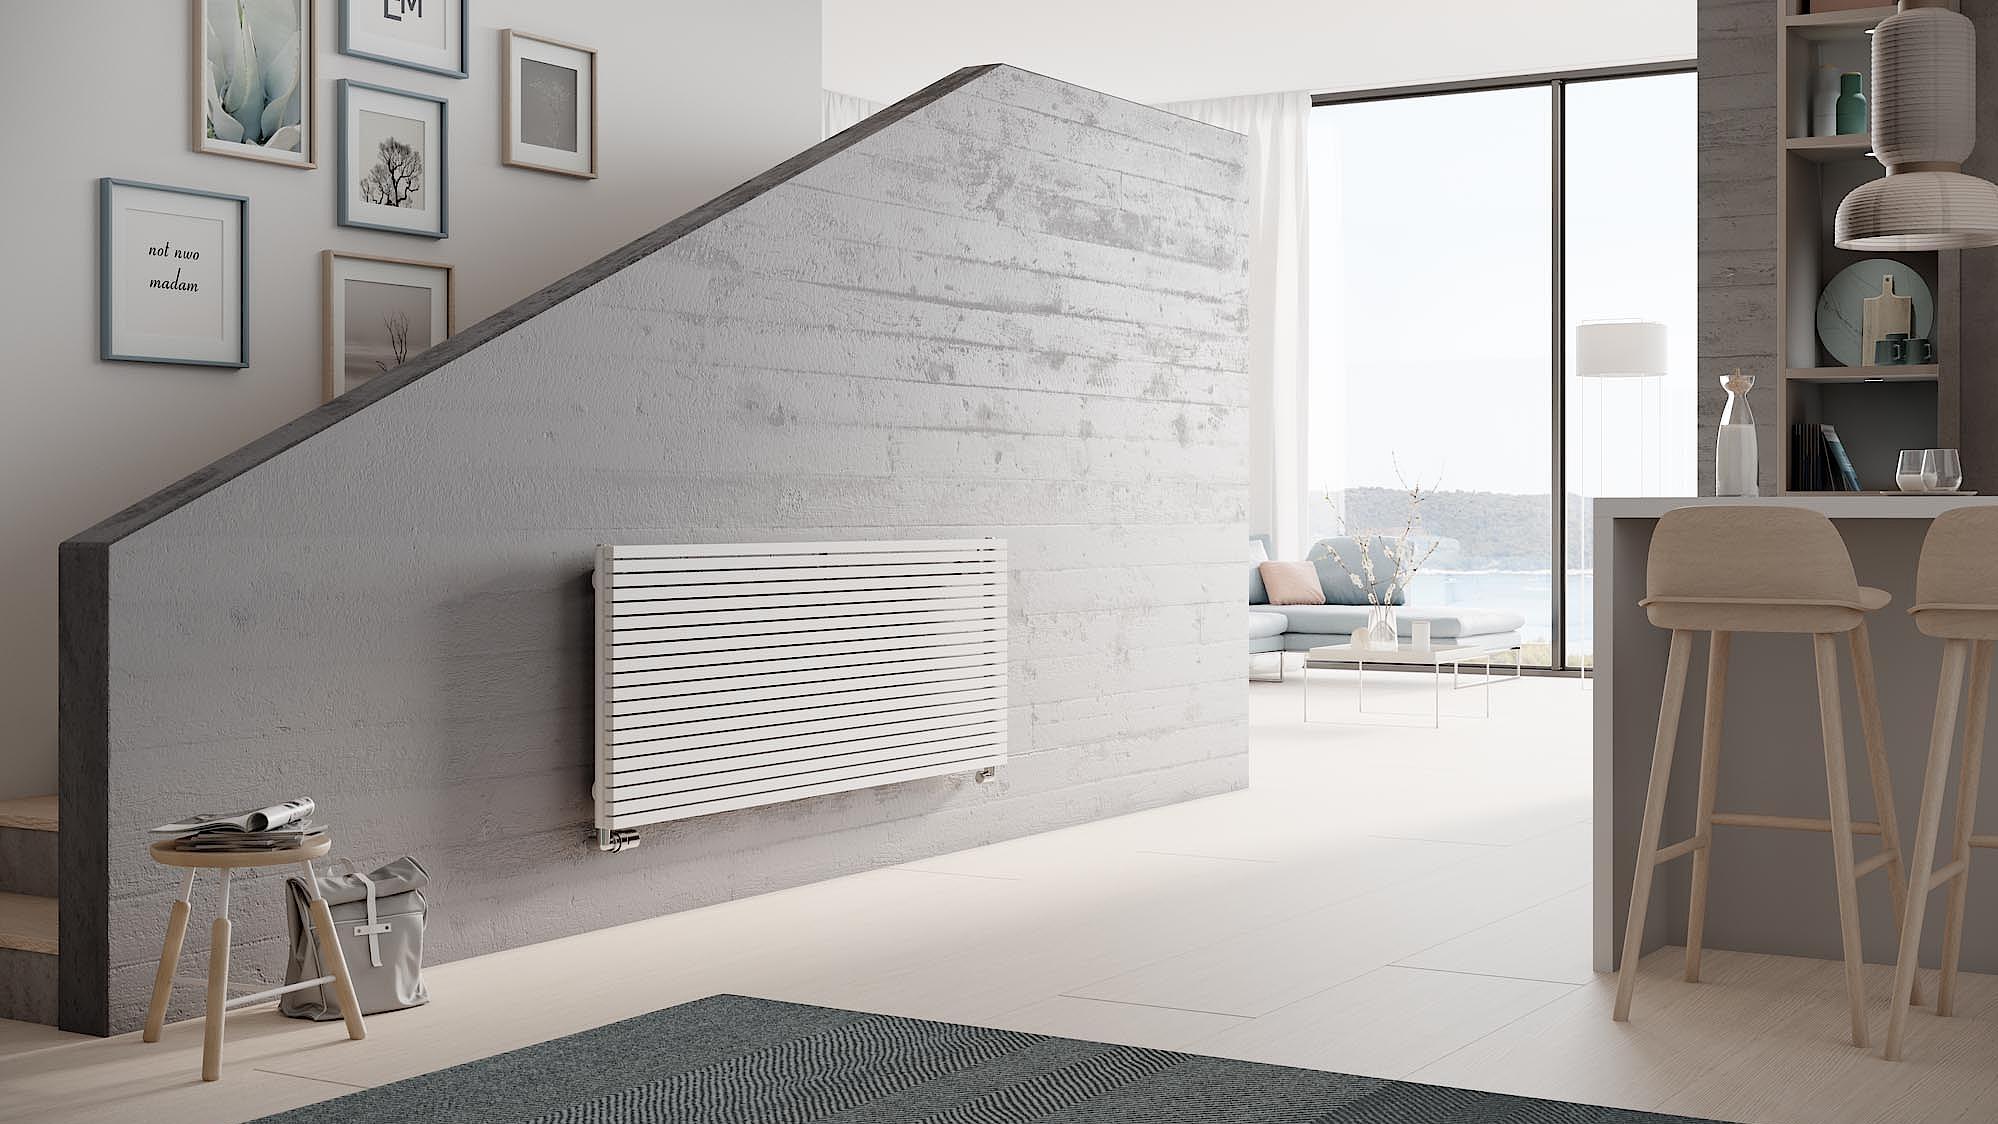 Kermi Decor-Arte Pure design and bathroom radiators – clear design. Horizontal or vertical versions available.